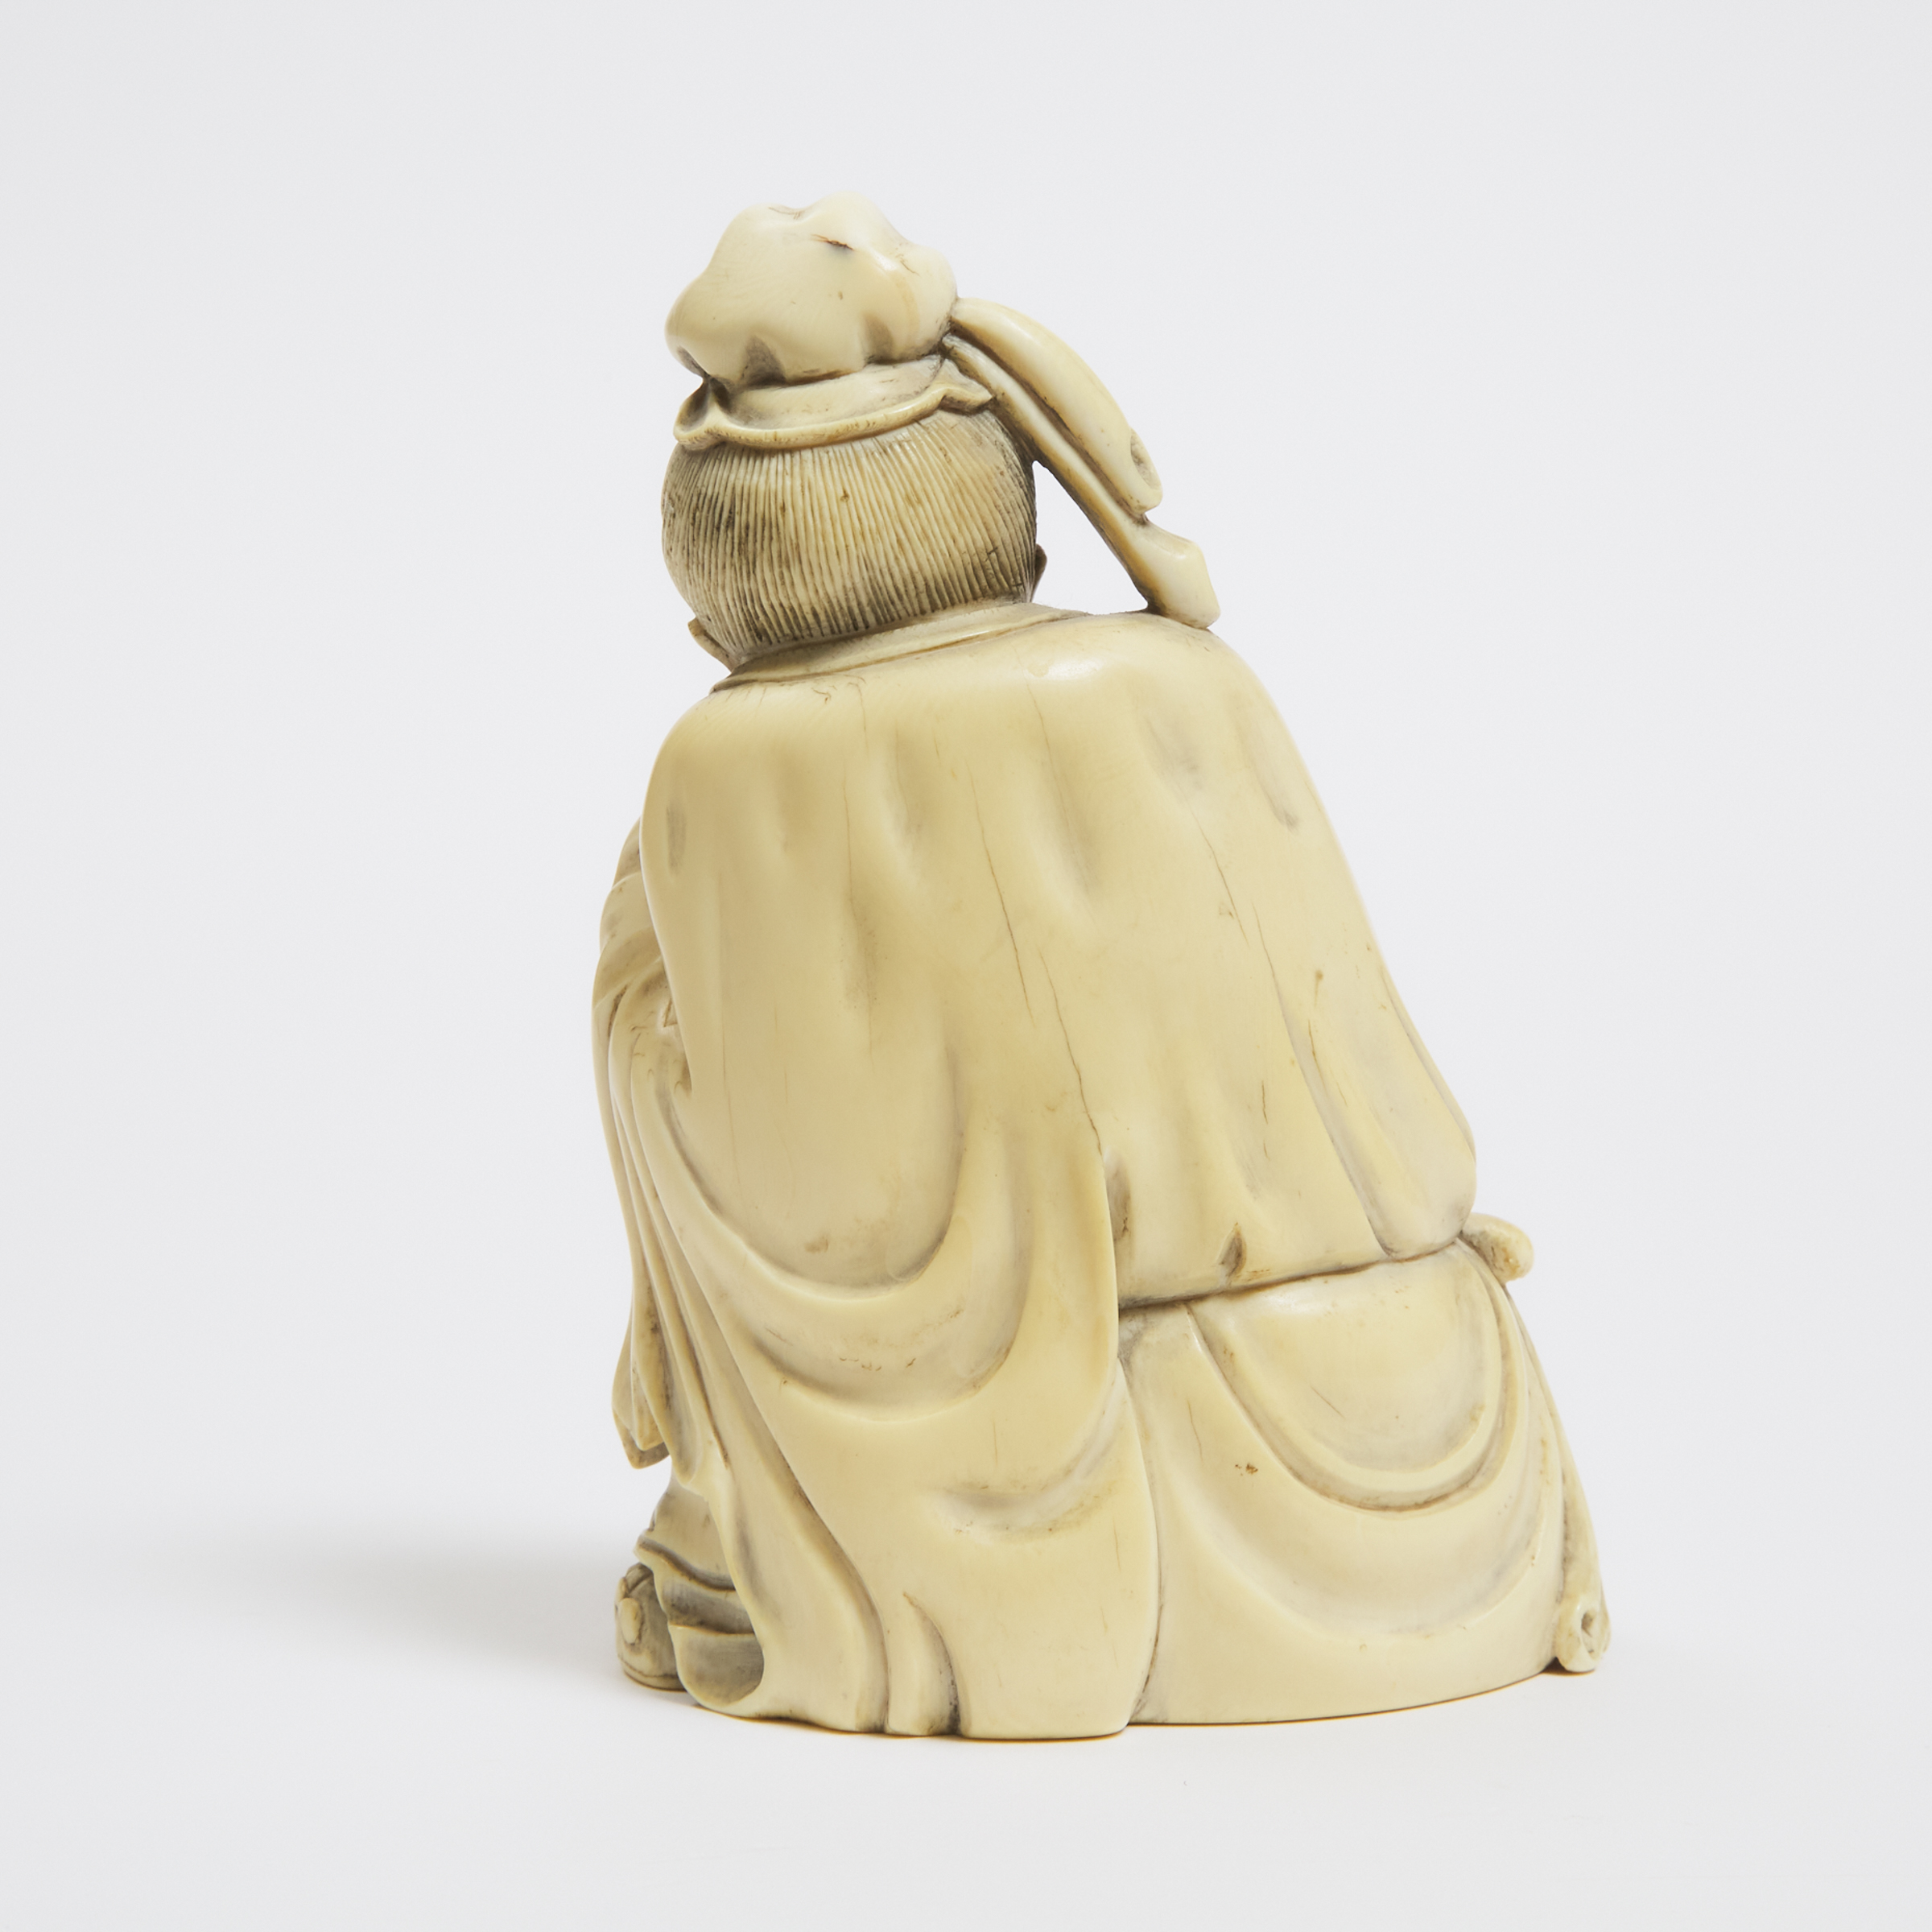 An Ivory Figure of the Drunken Poet Li Bai, Early to Mid 20th Century